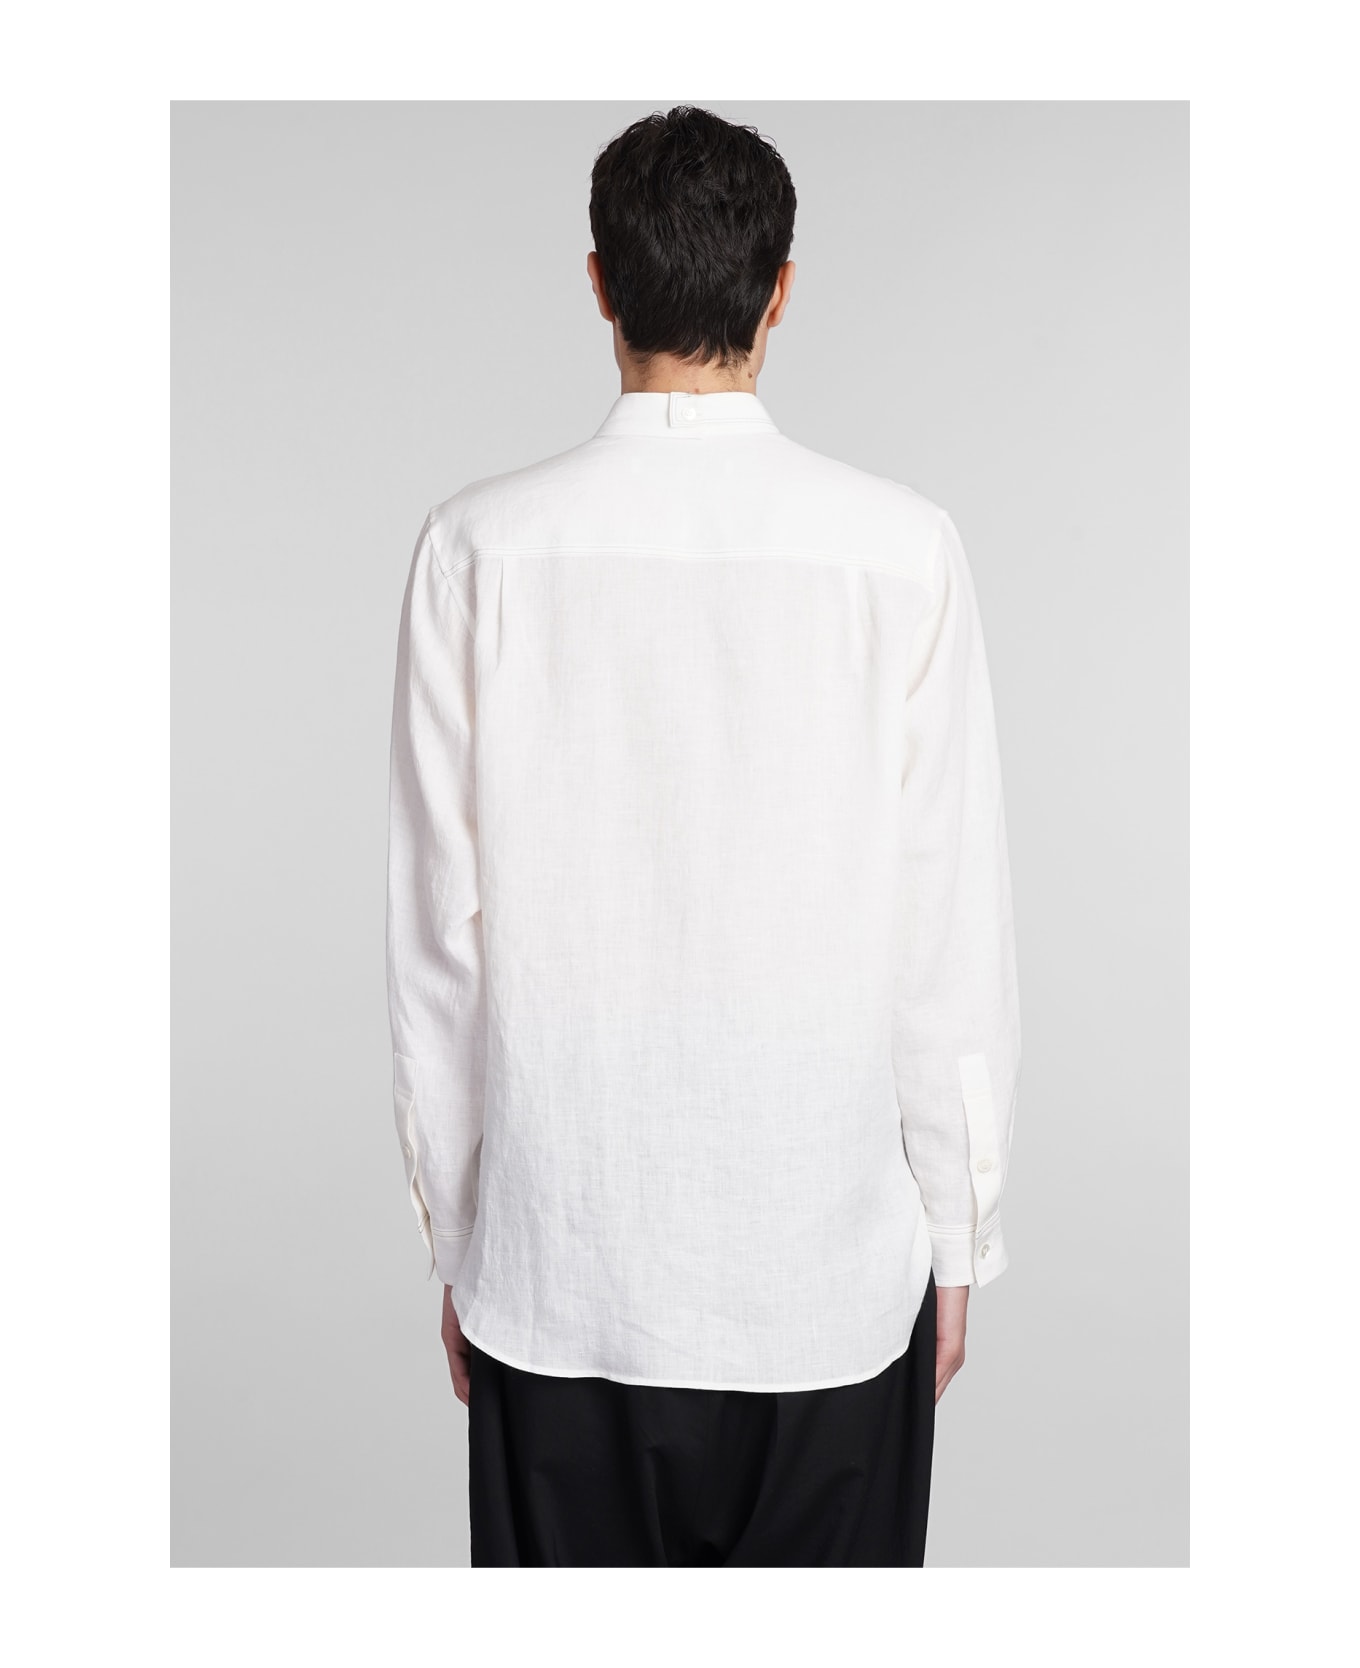 Yohji Yamamoto Shirt In White Linen - white